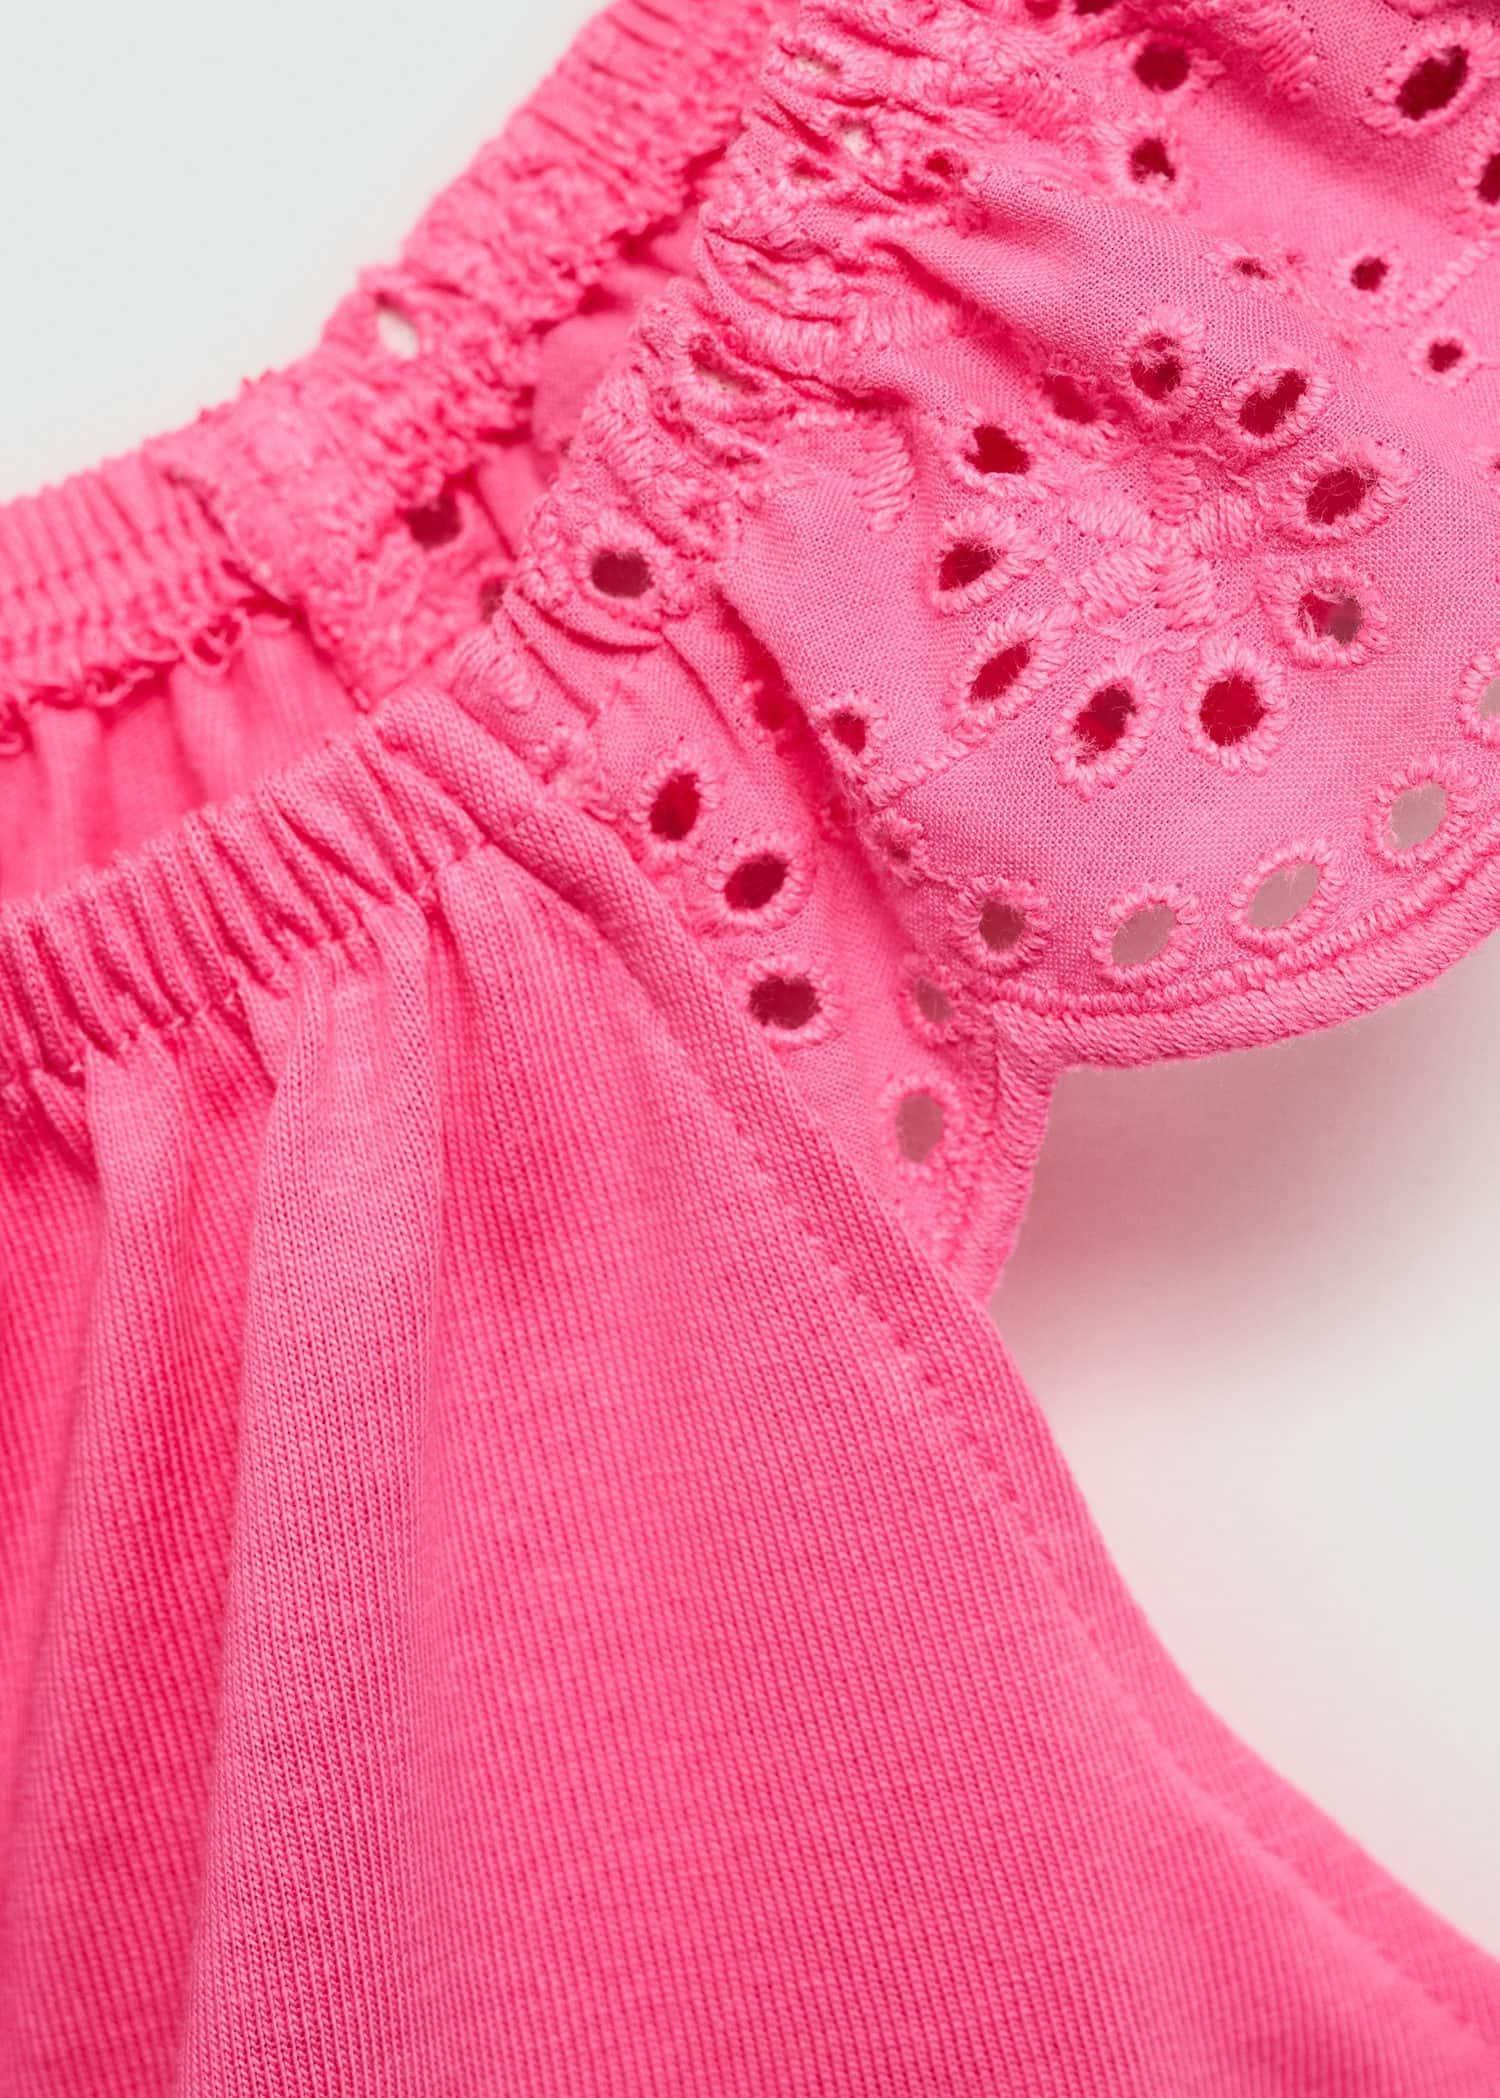 Mango - Pink Palm-Print Jumpsuit, Kids Girls